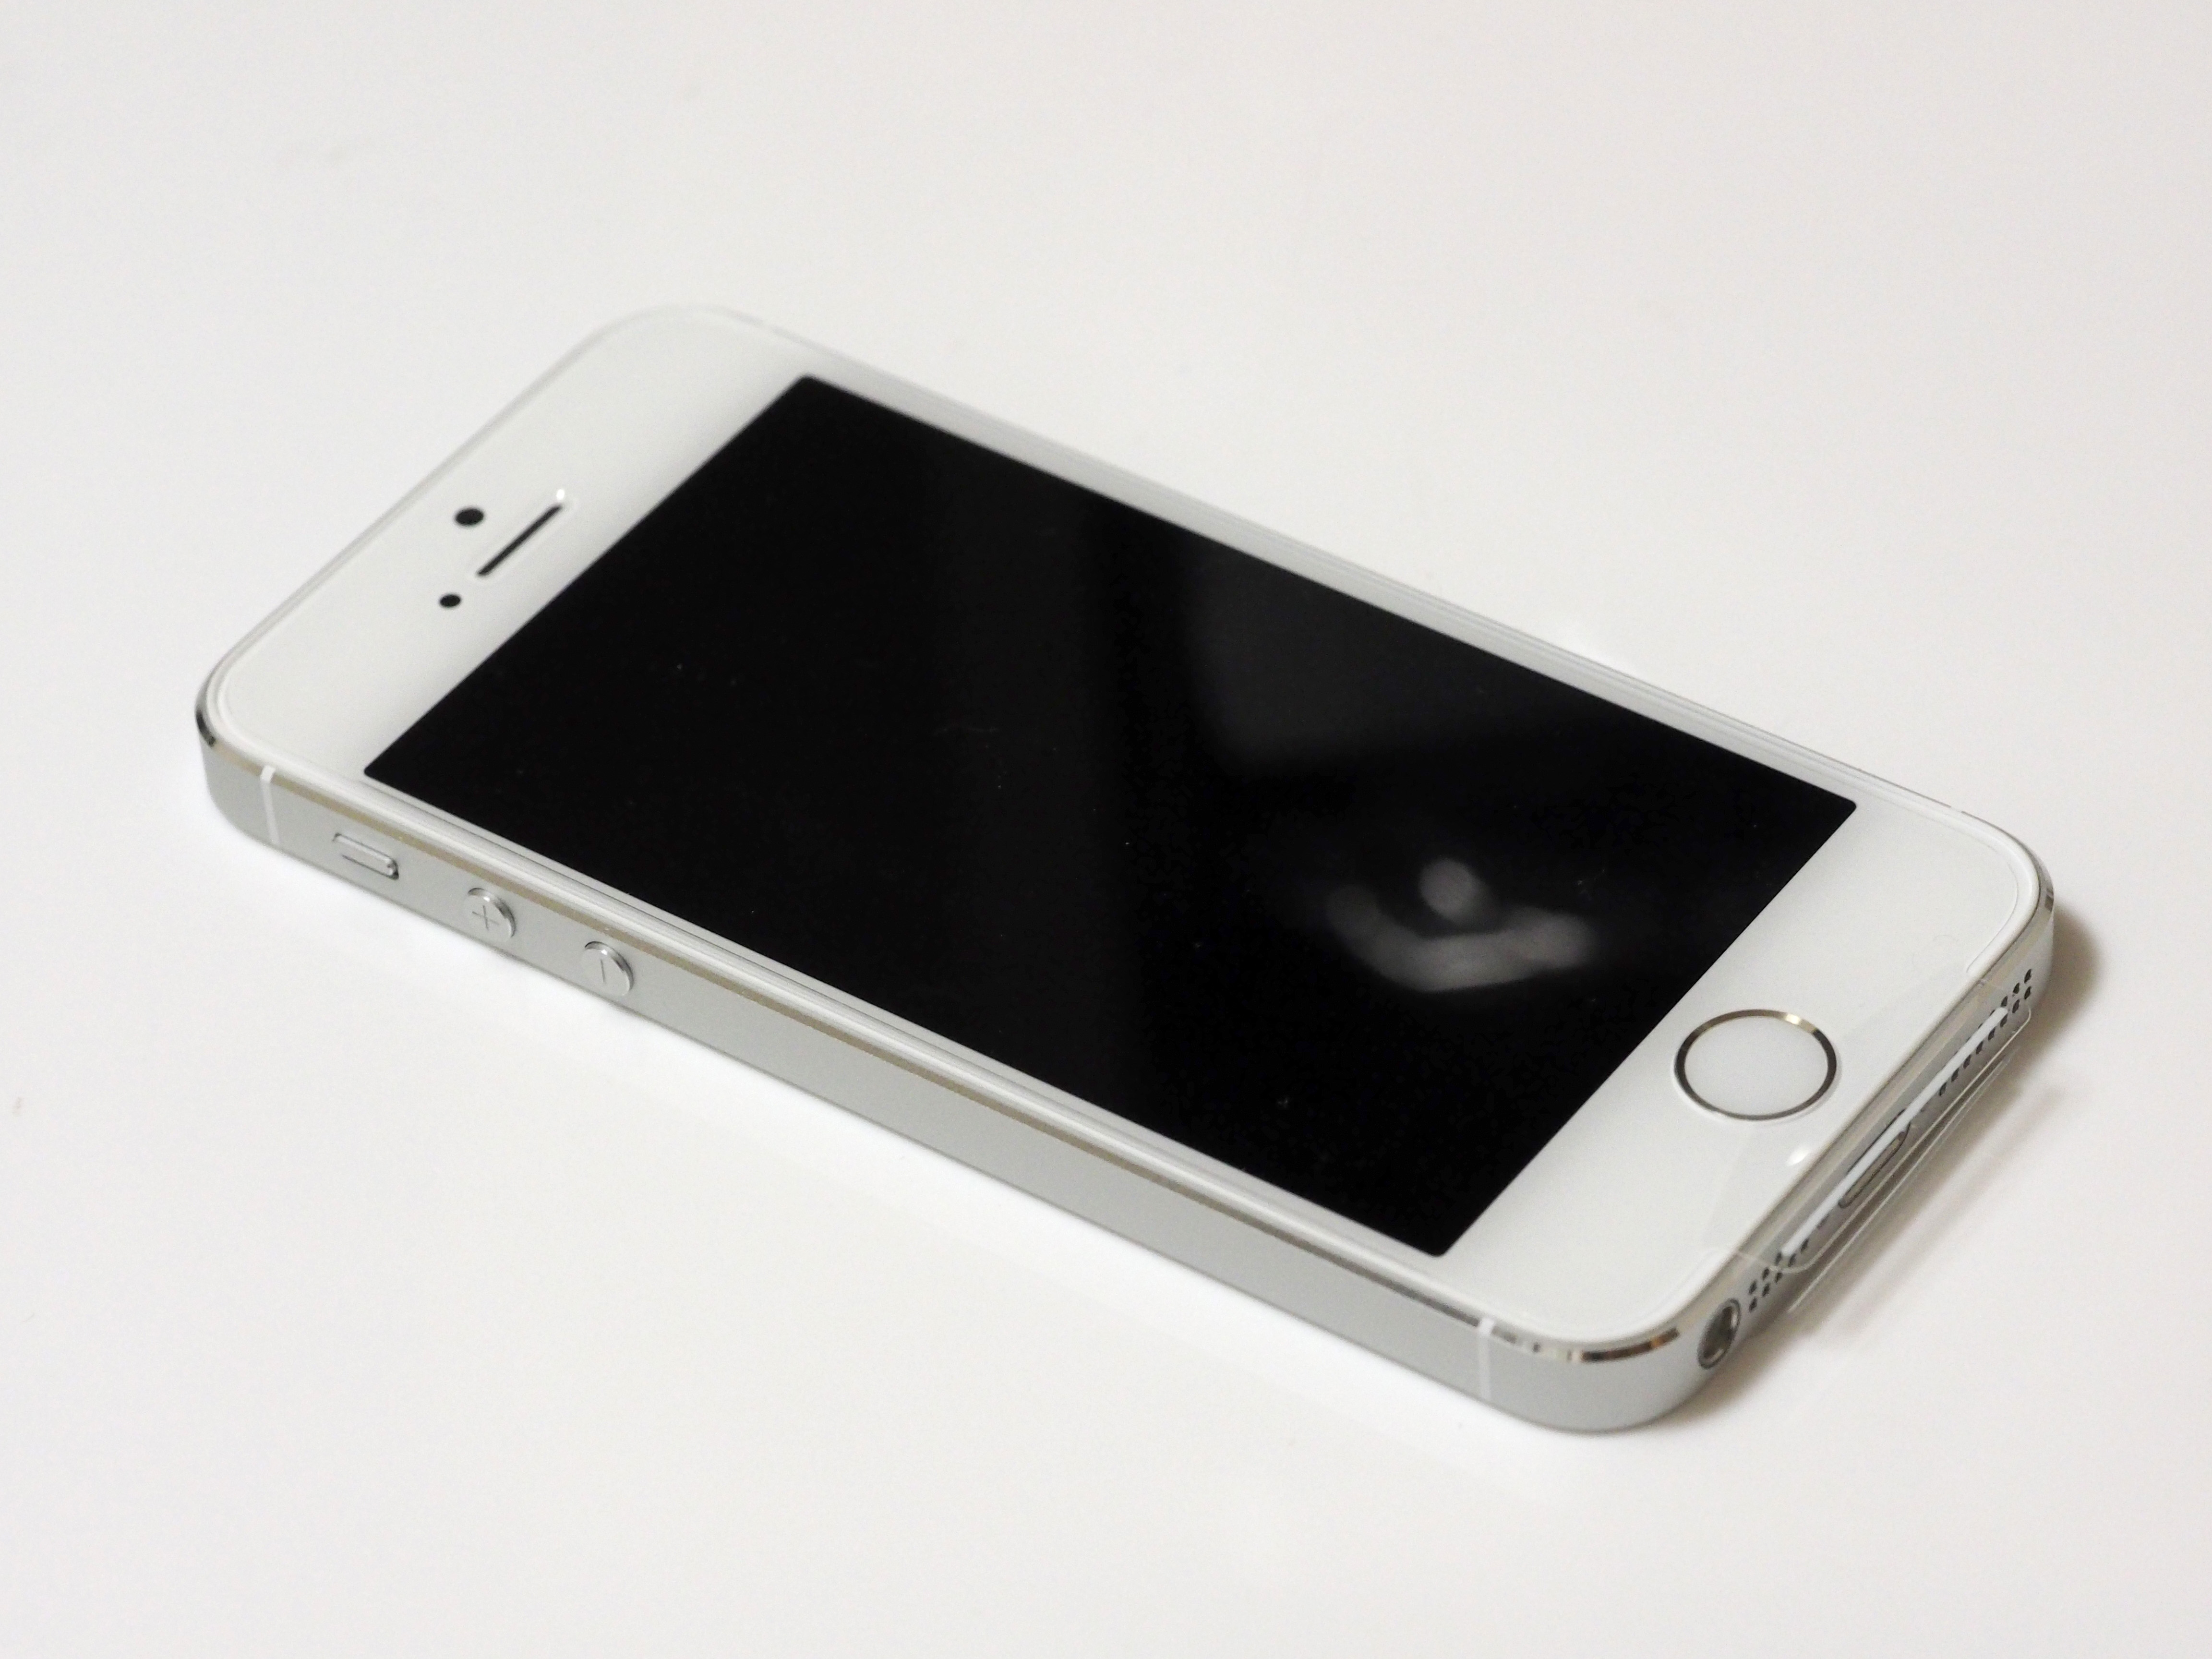 Apple Iphone5s のレビュー Iphone5sの初期設定 Ipentec